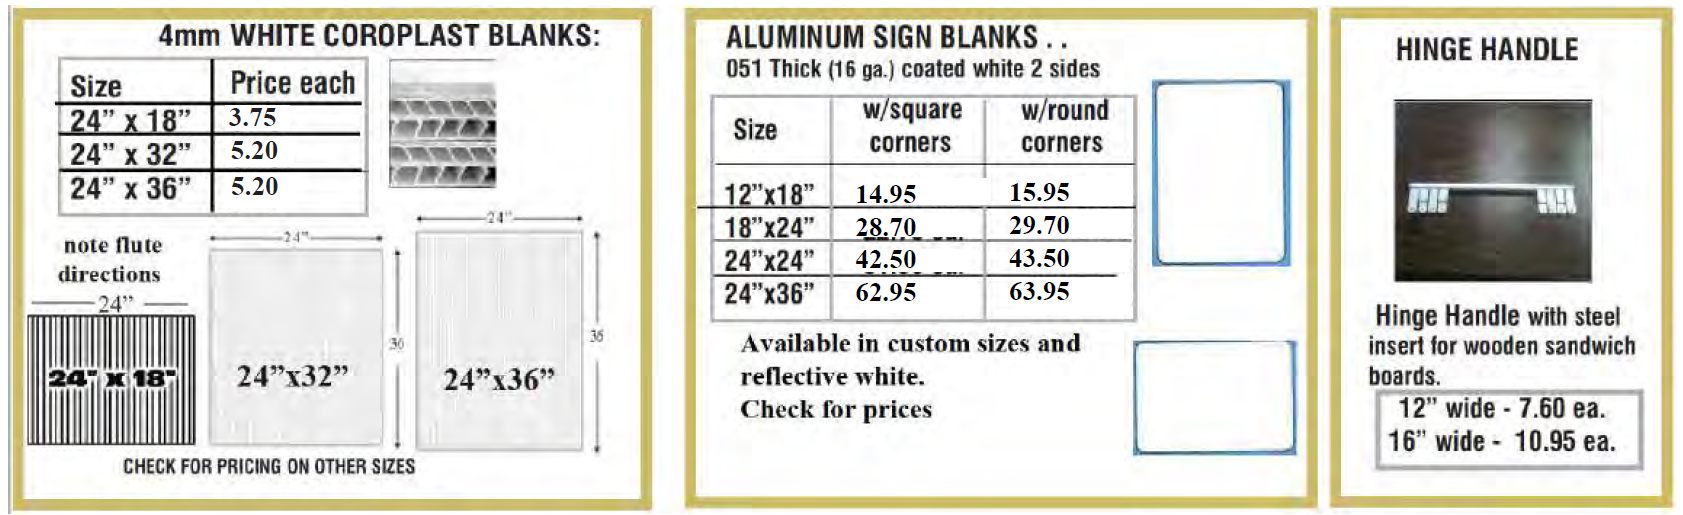 Sign Blanks - Sign Blanks - "Coroplast" - Hinge Handle - Aluminum Blanks